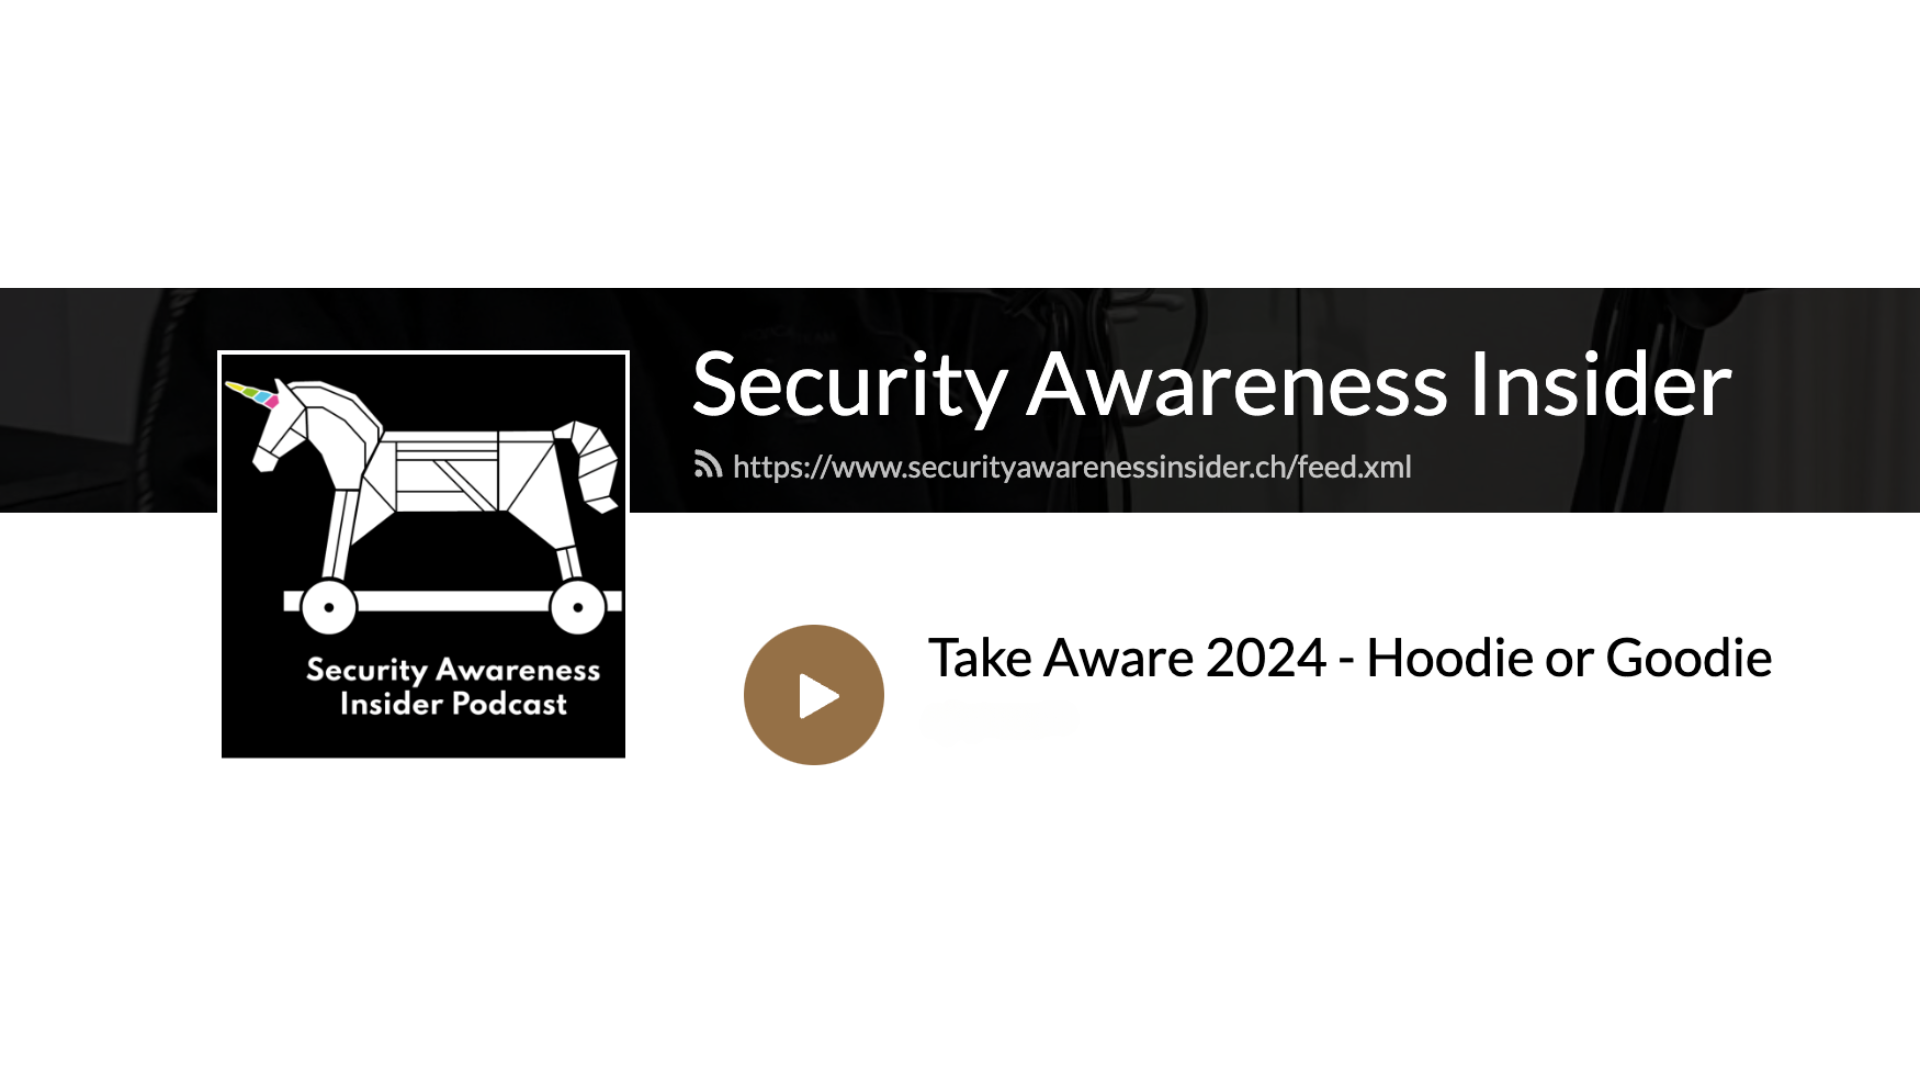 Security Awareness Insider über die TAKE AWARE 2024